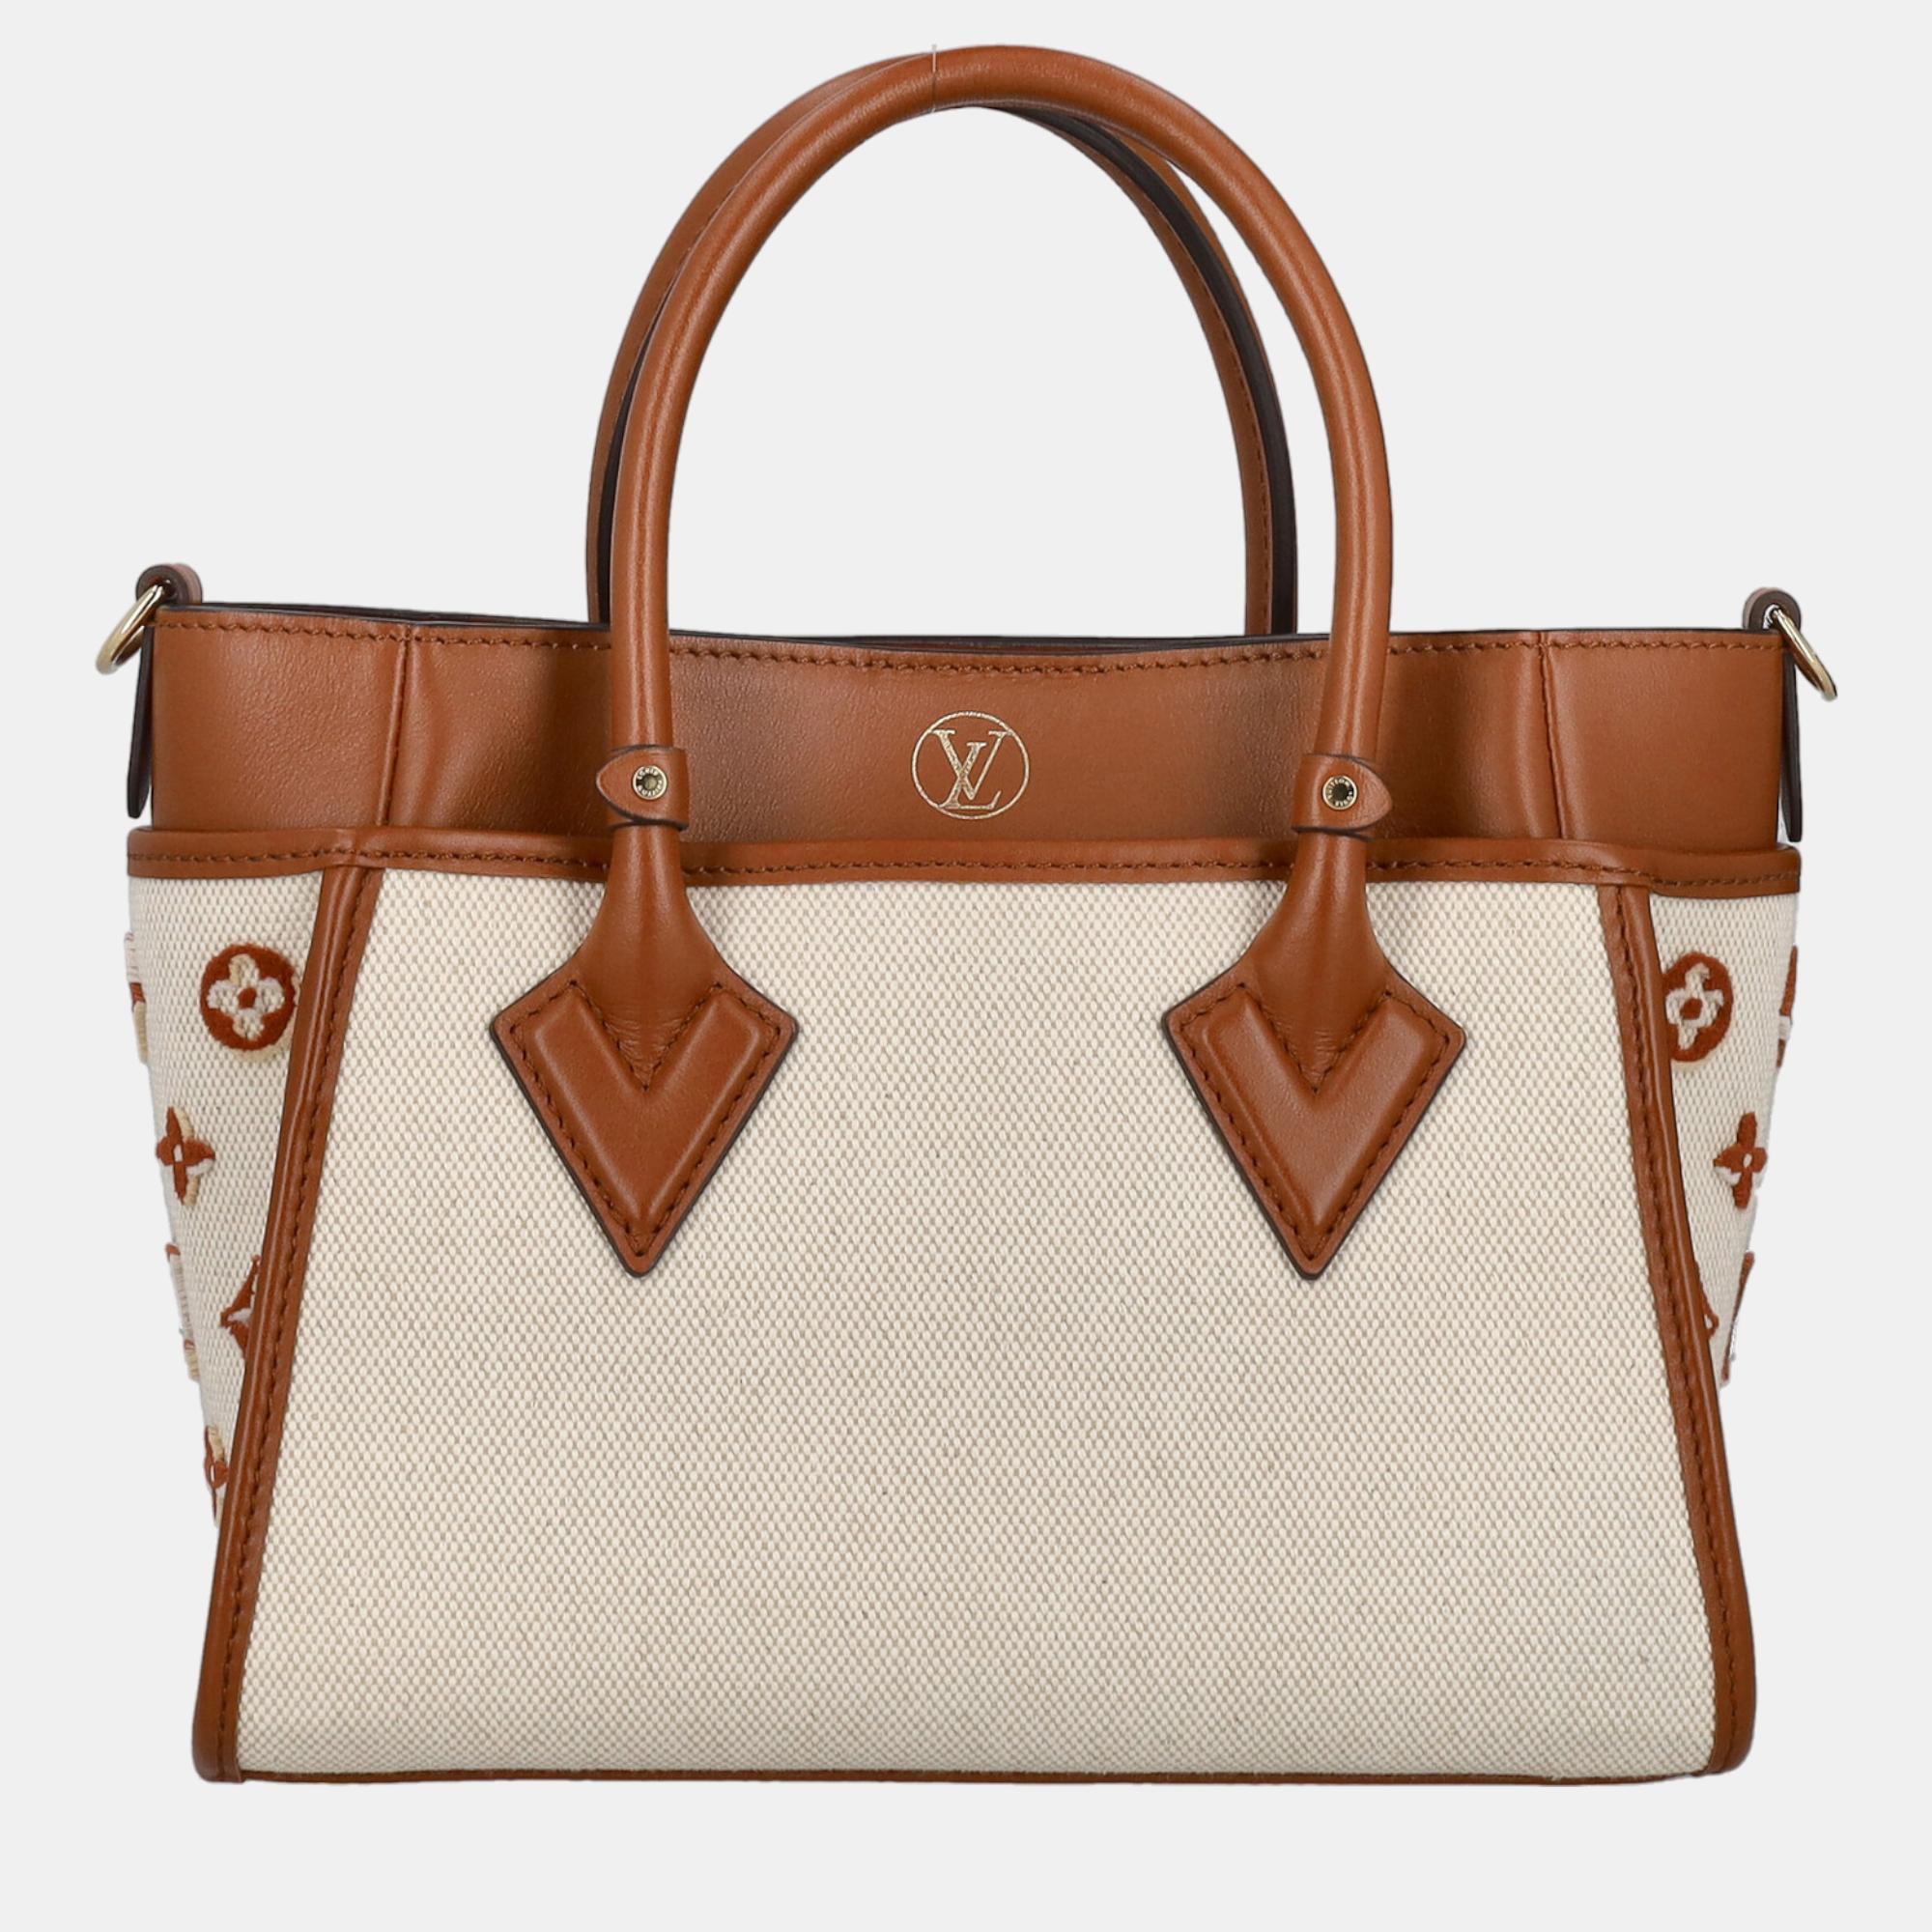 Louis Vuitton  Women's Fabric Handbag - Camel Color - One Size